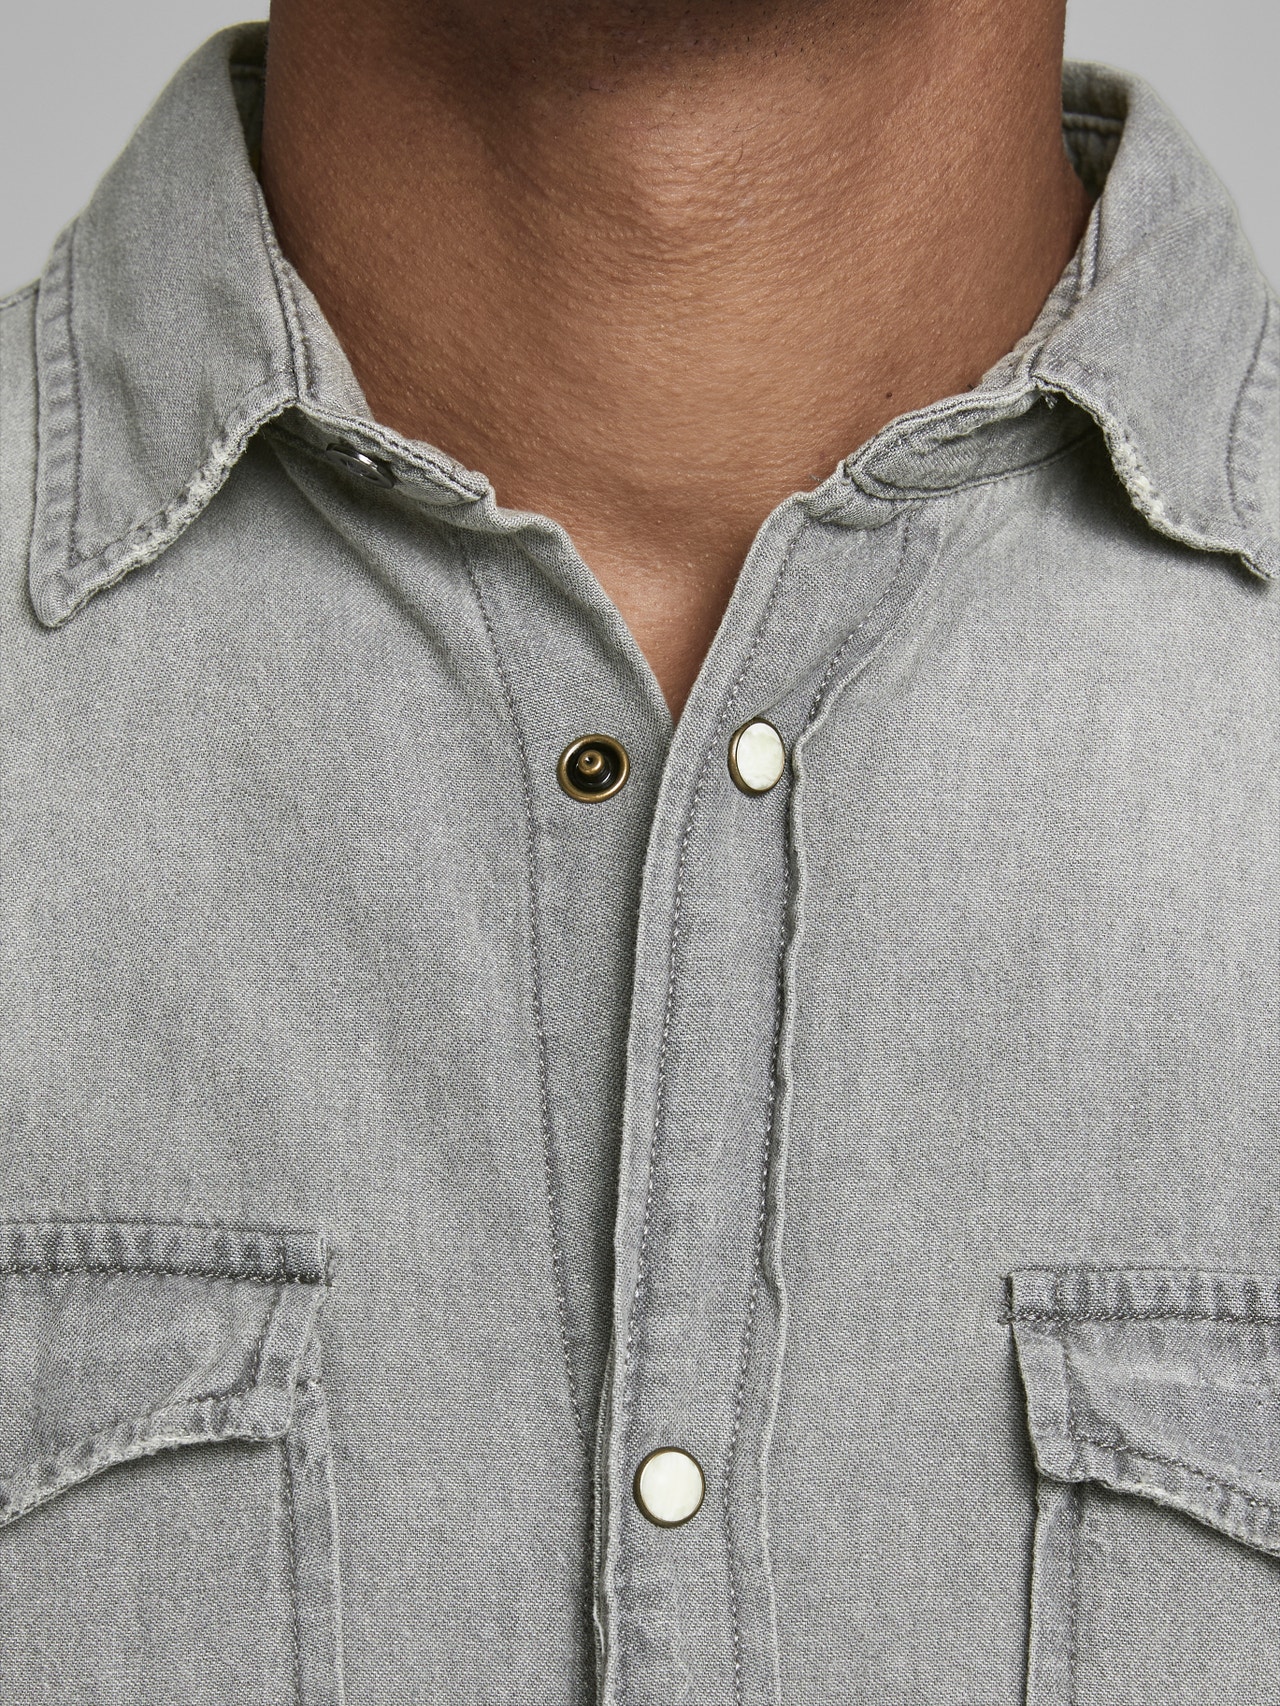 Jack & Jones Camisa de Ganga Slim Fit -Light Grey Denim - 12138115